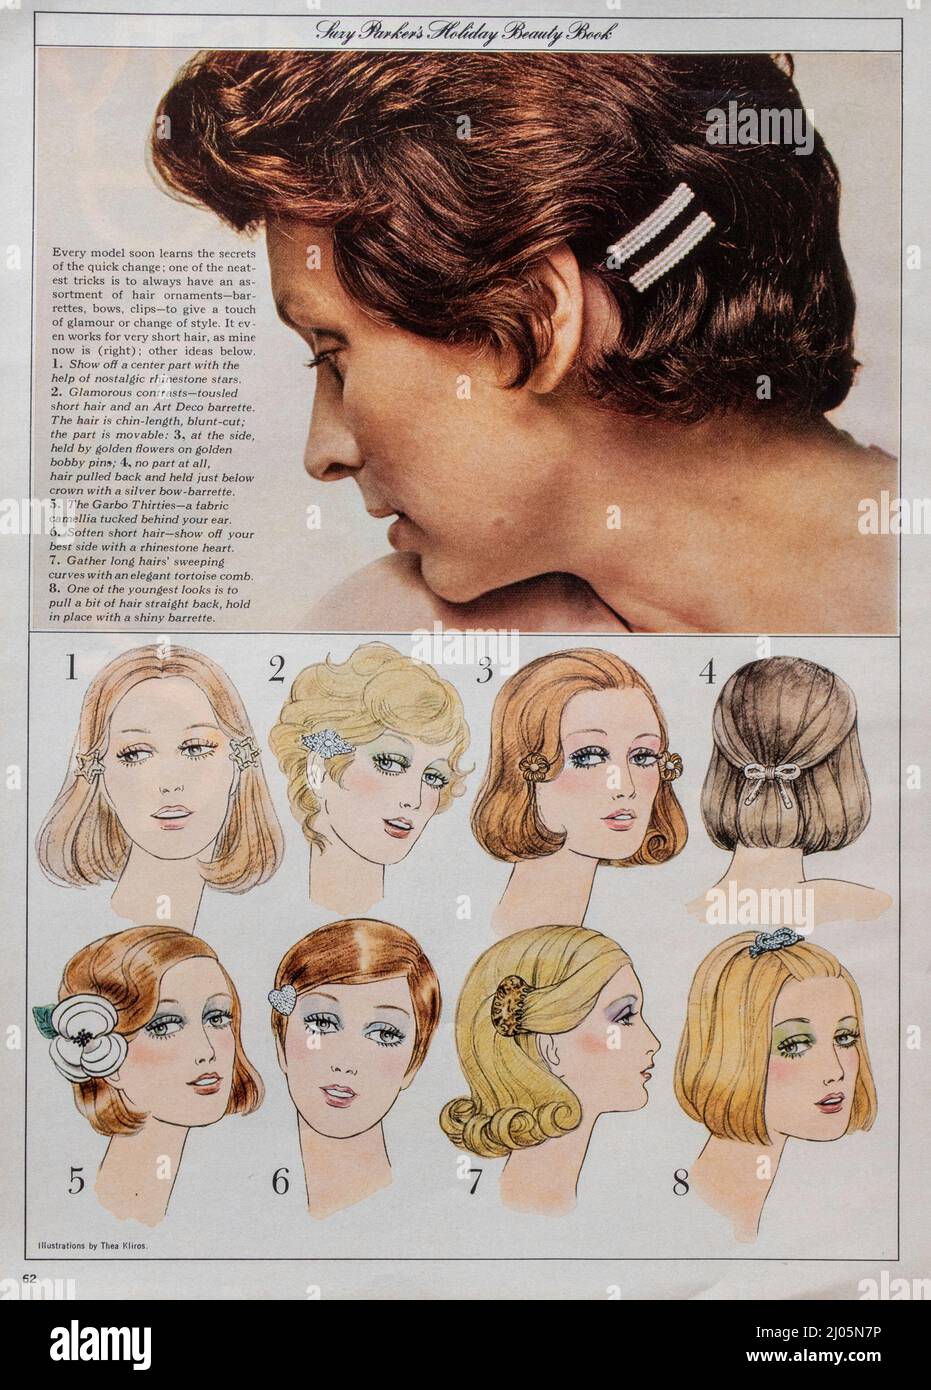 Vintage November 1973 'Ladies' Home Journal' magazine advert, USA Stock Photo